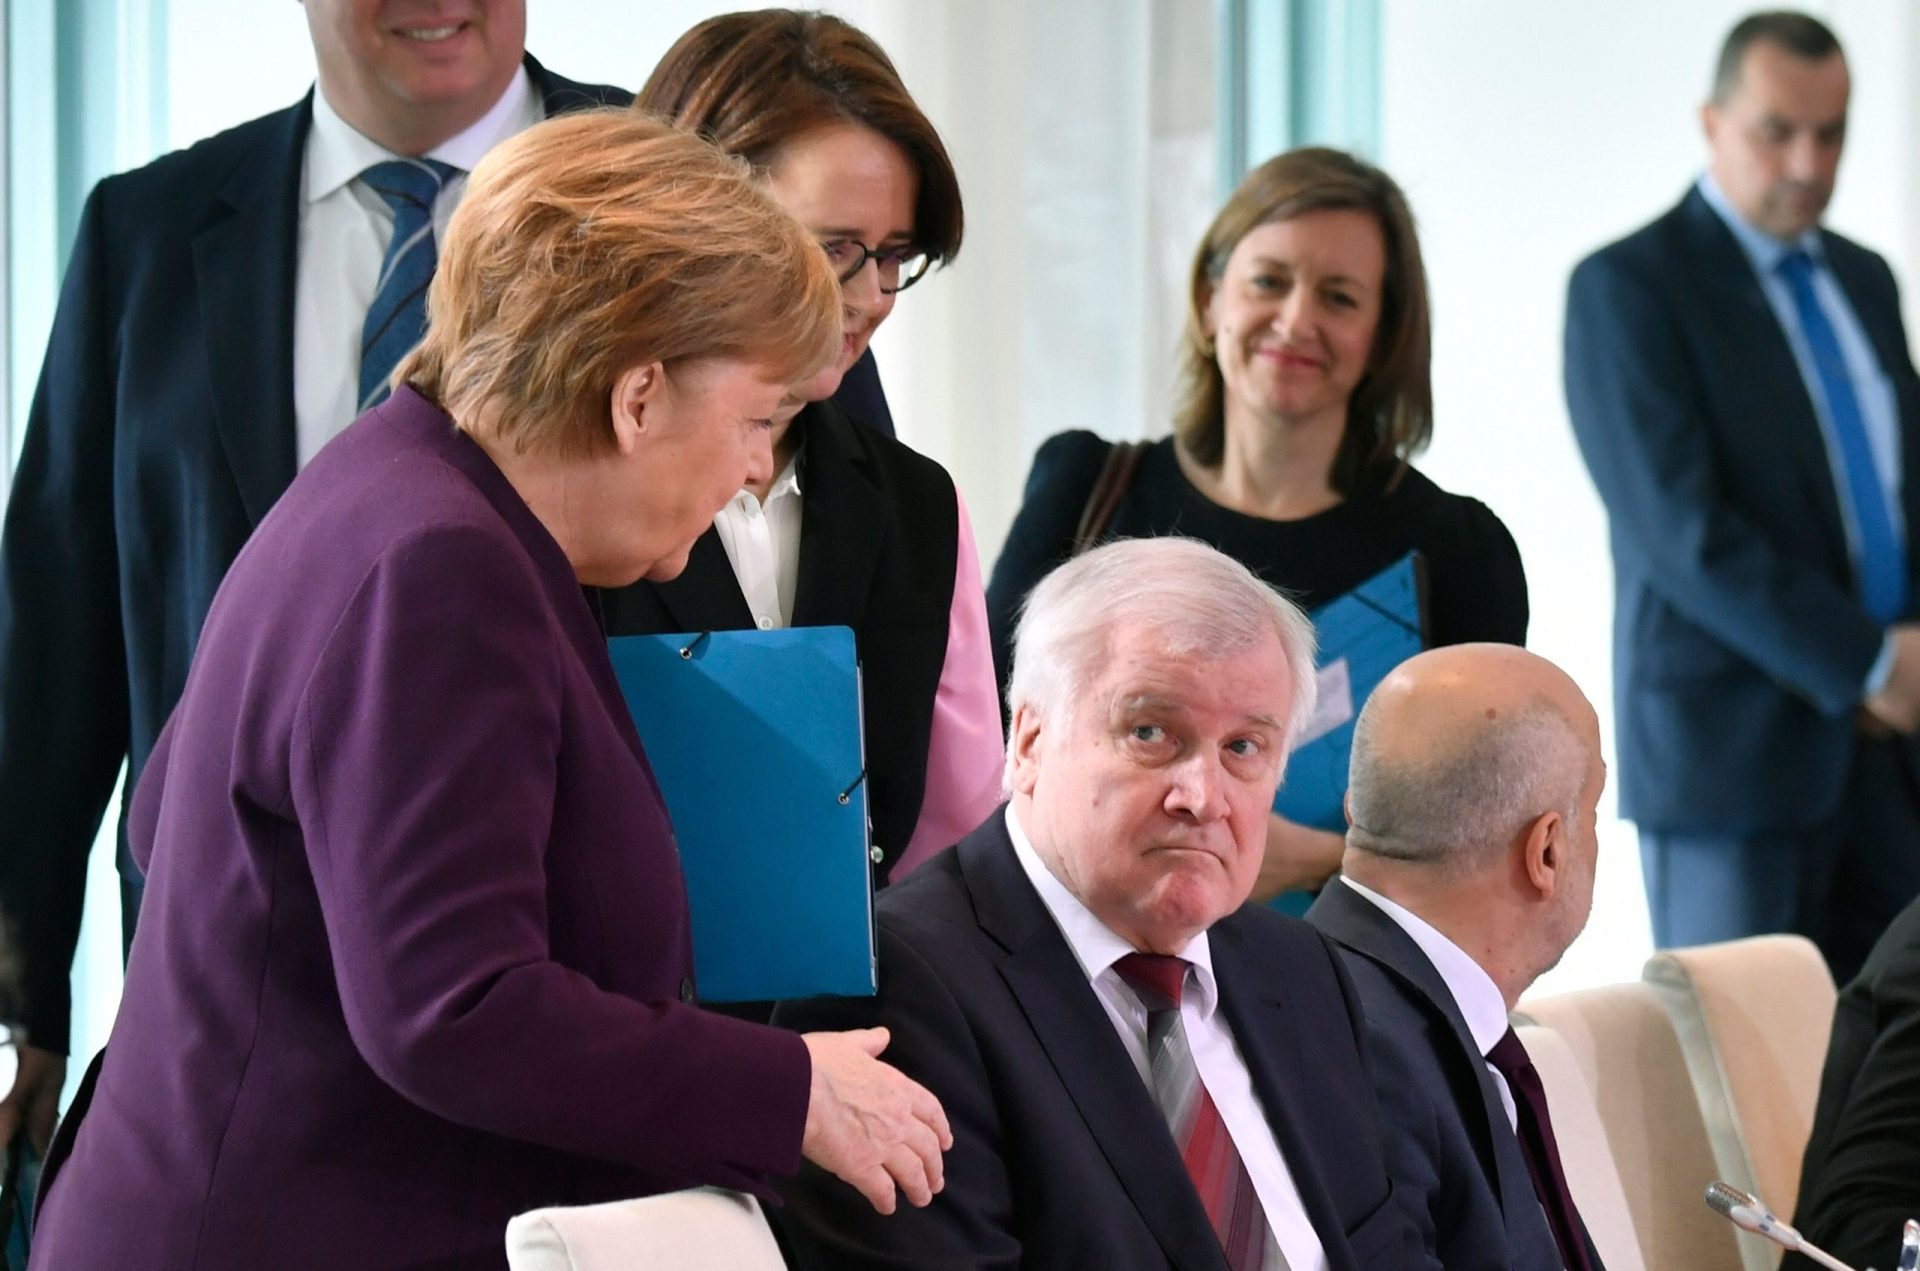 Merkel estende a mão a ministro que recusa cumprimentá-la devido a coronavírus | VÍDEO